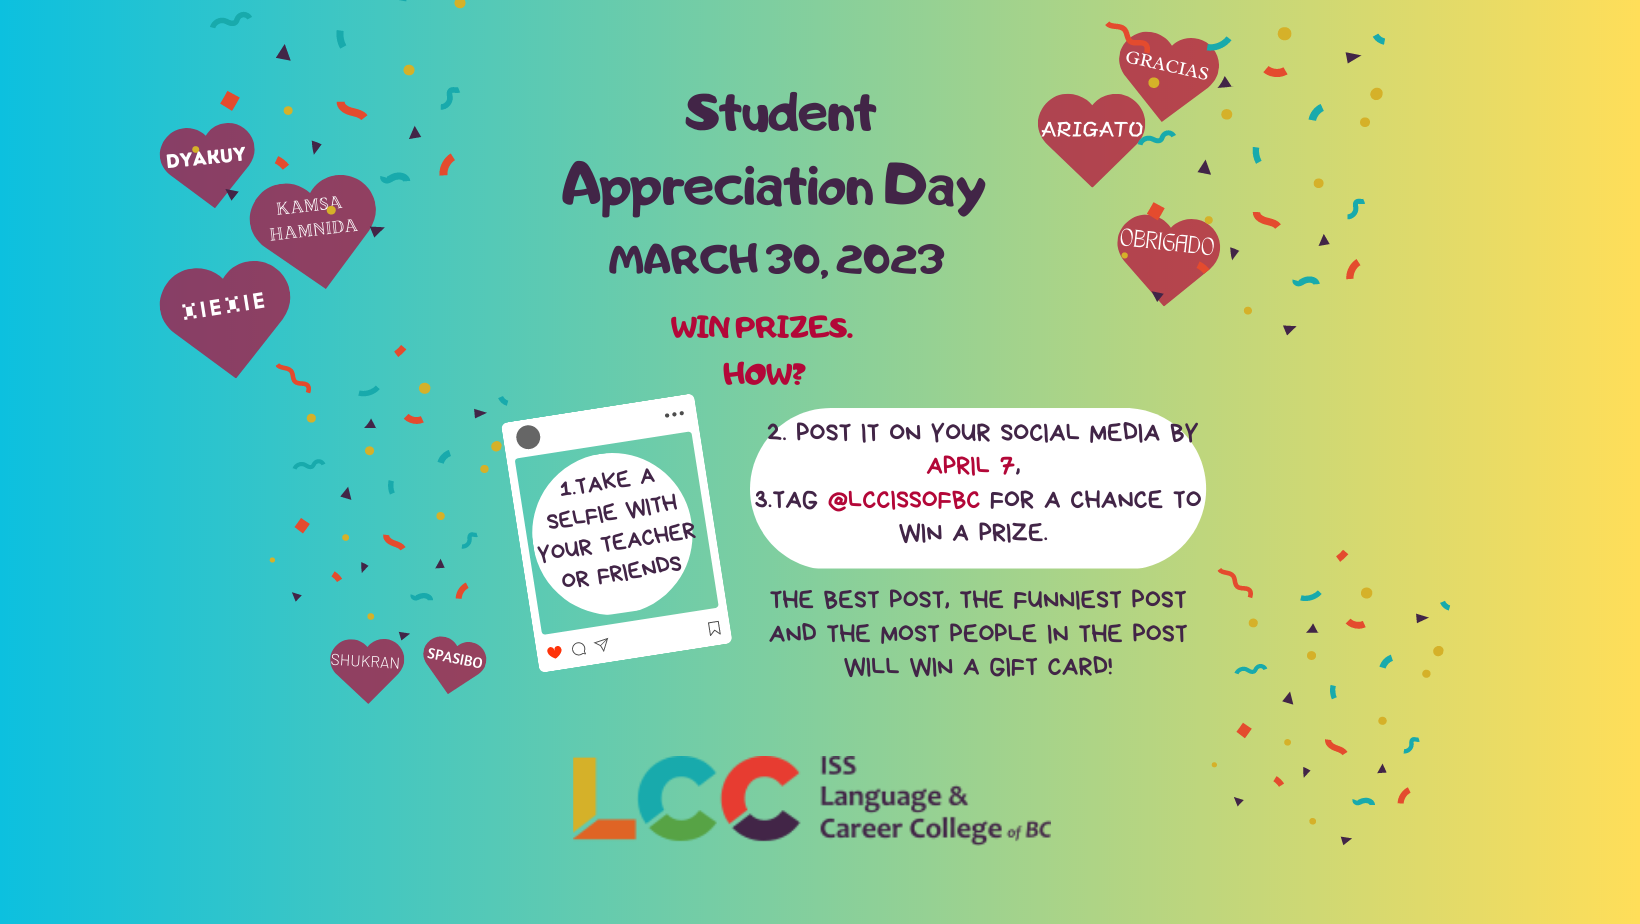 Student Appreciation Day, March 30, 2023